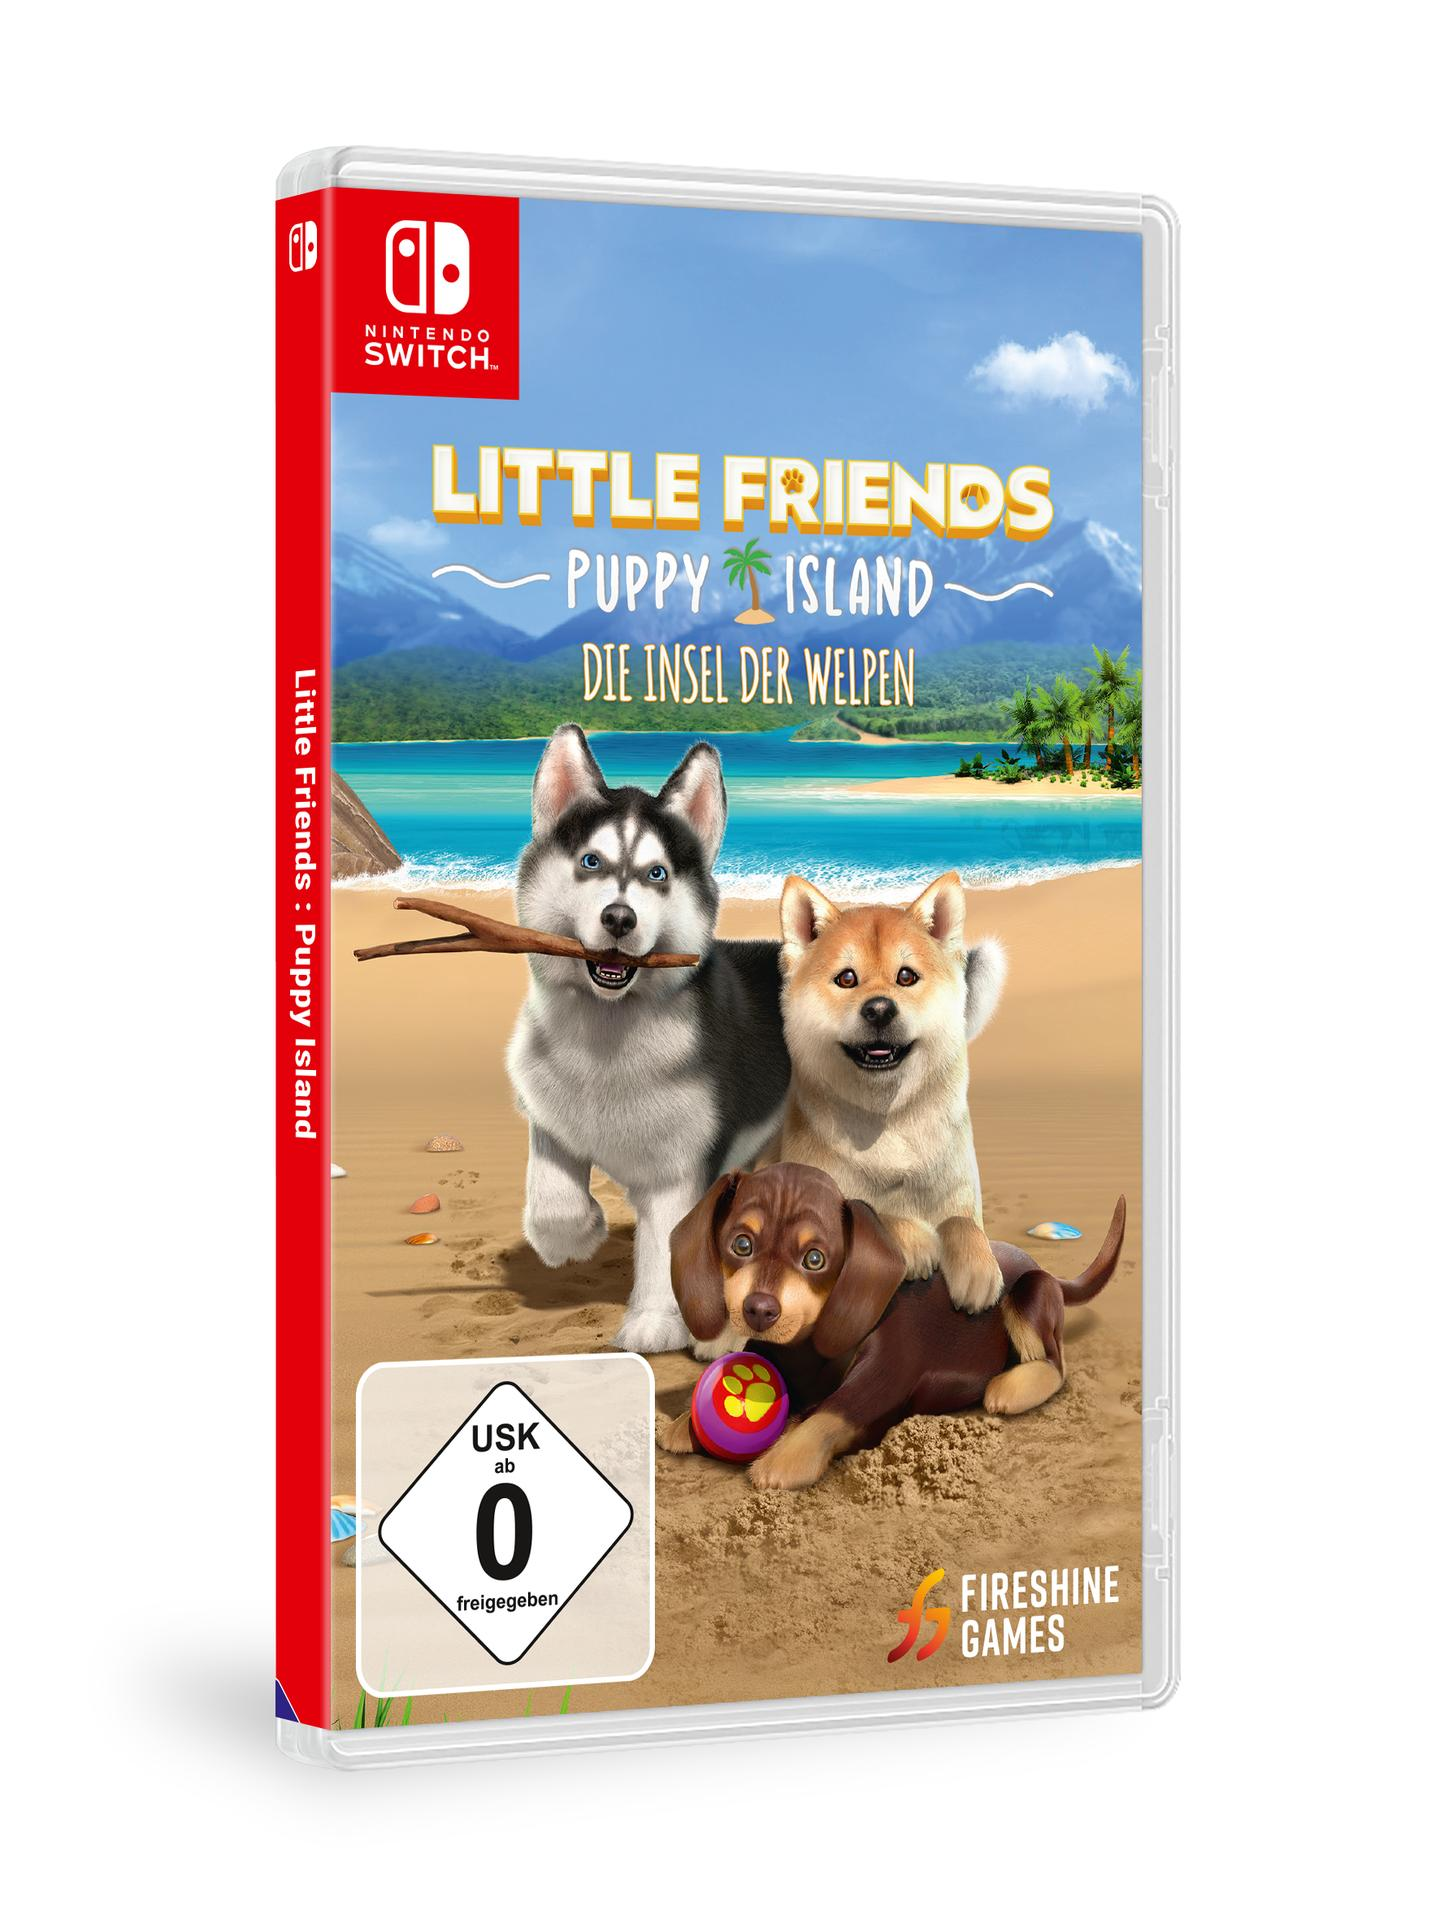 Puppy Friends: Island Little Switch] [Nintendo -